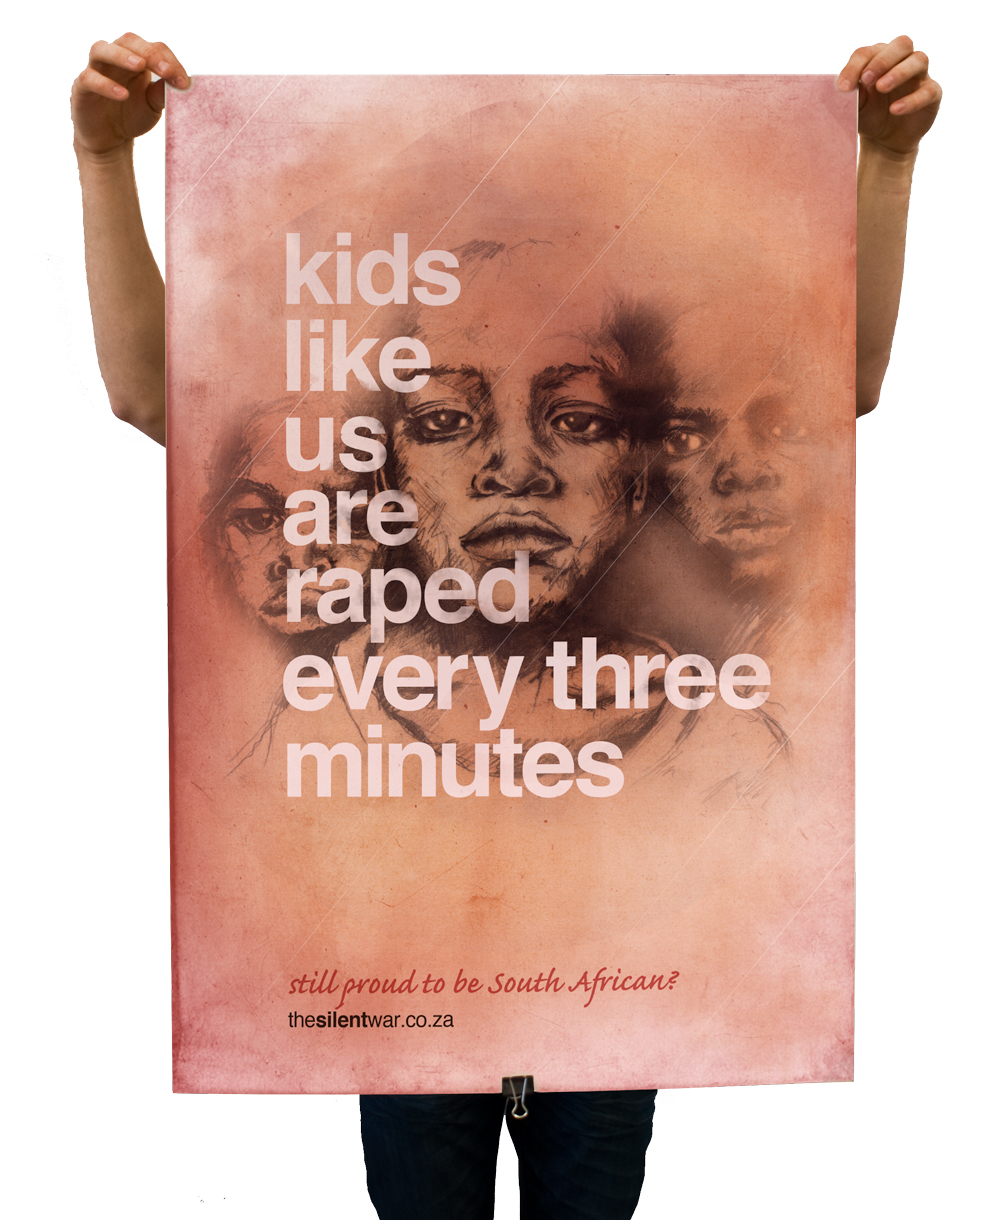 south africa rape social awareness silent war